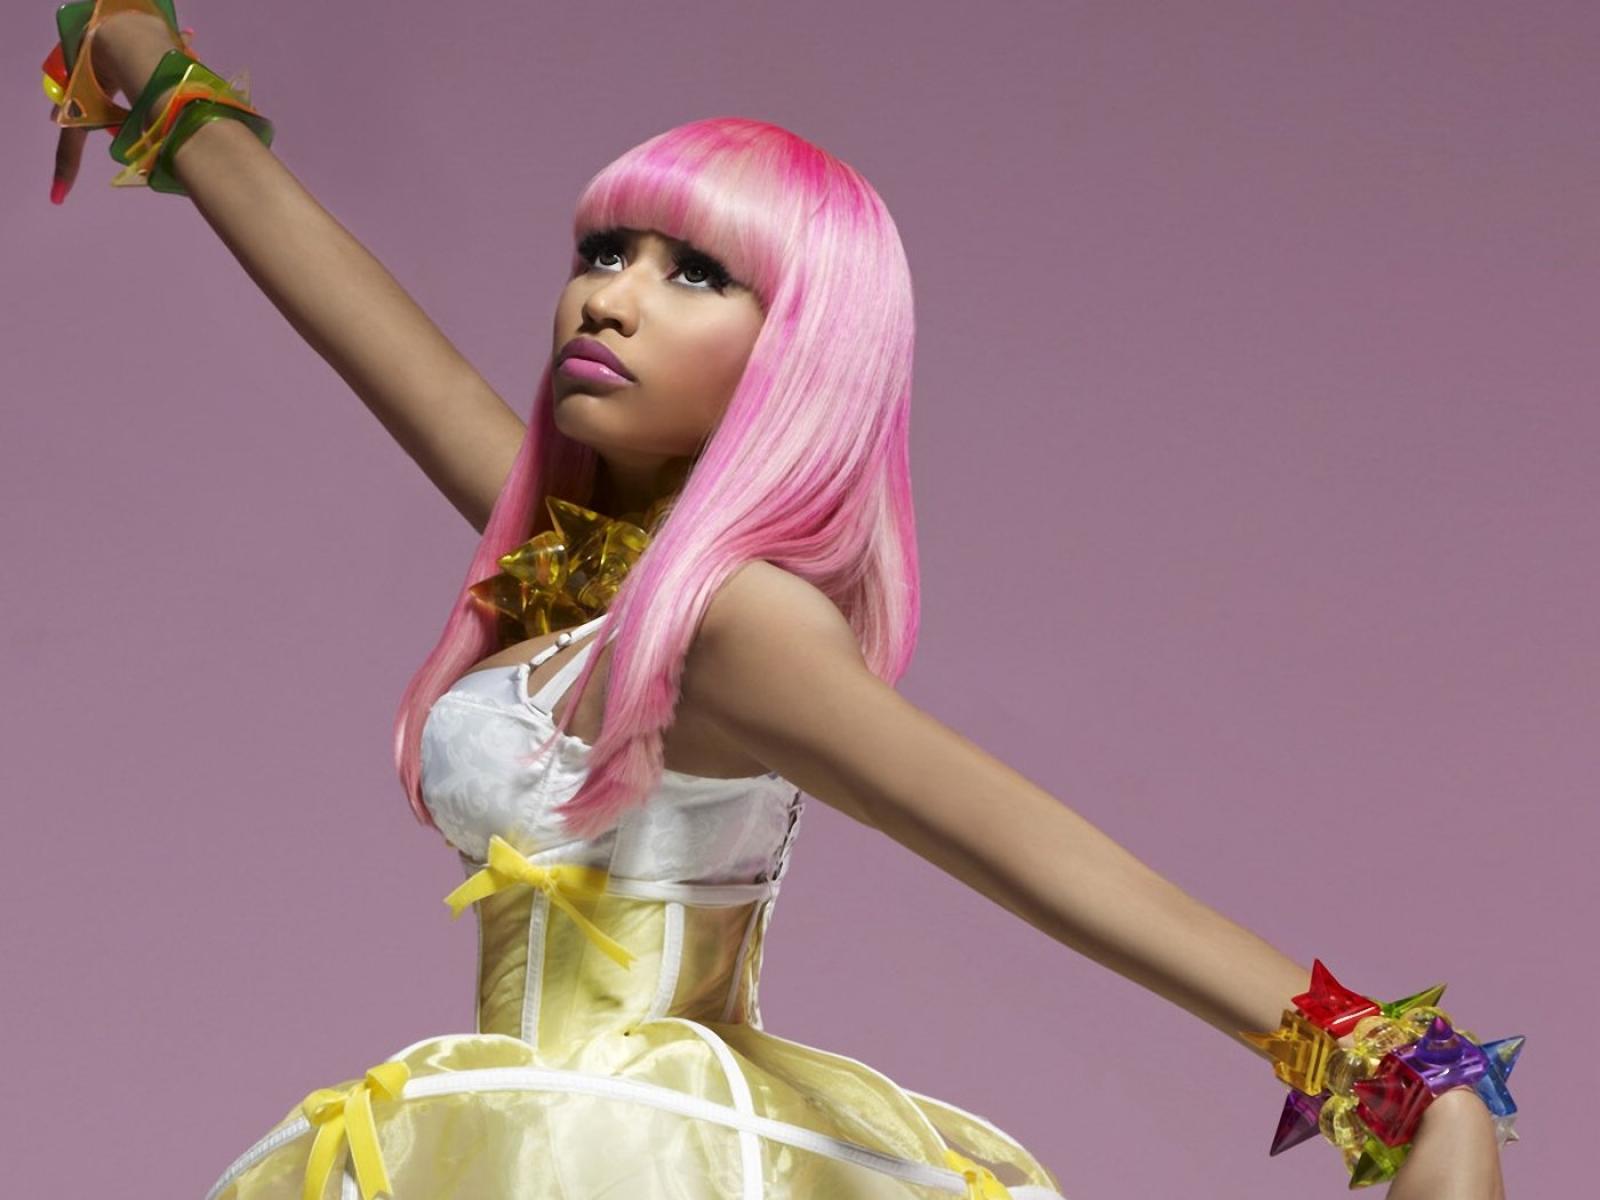 Nicki Minaj Dancing wallpapers Nicki Minaj Dancing stock photos